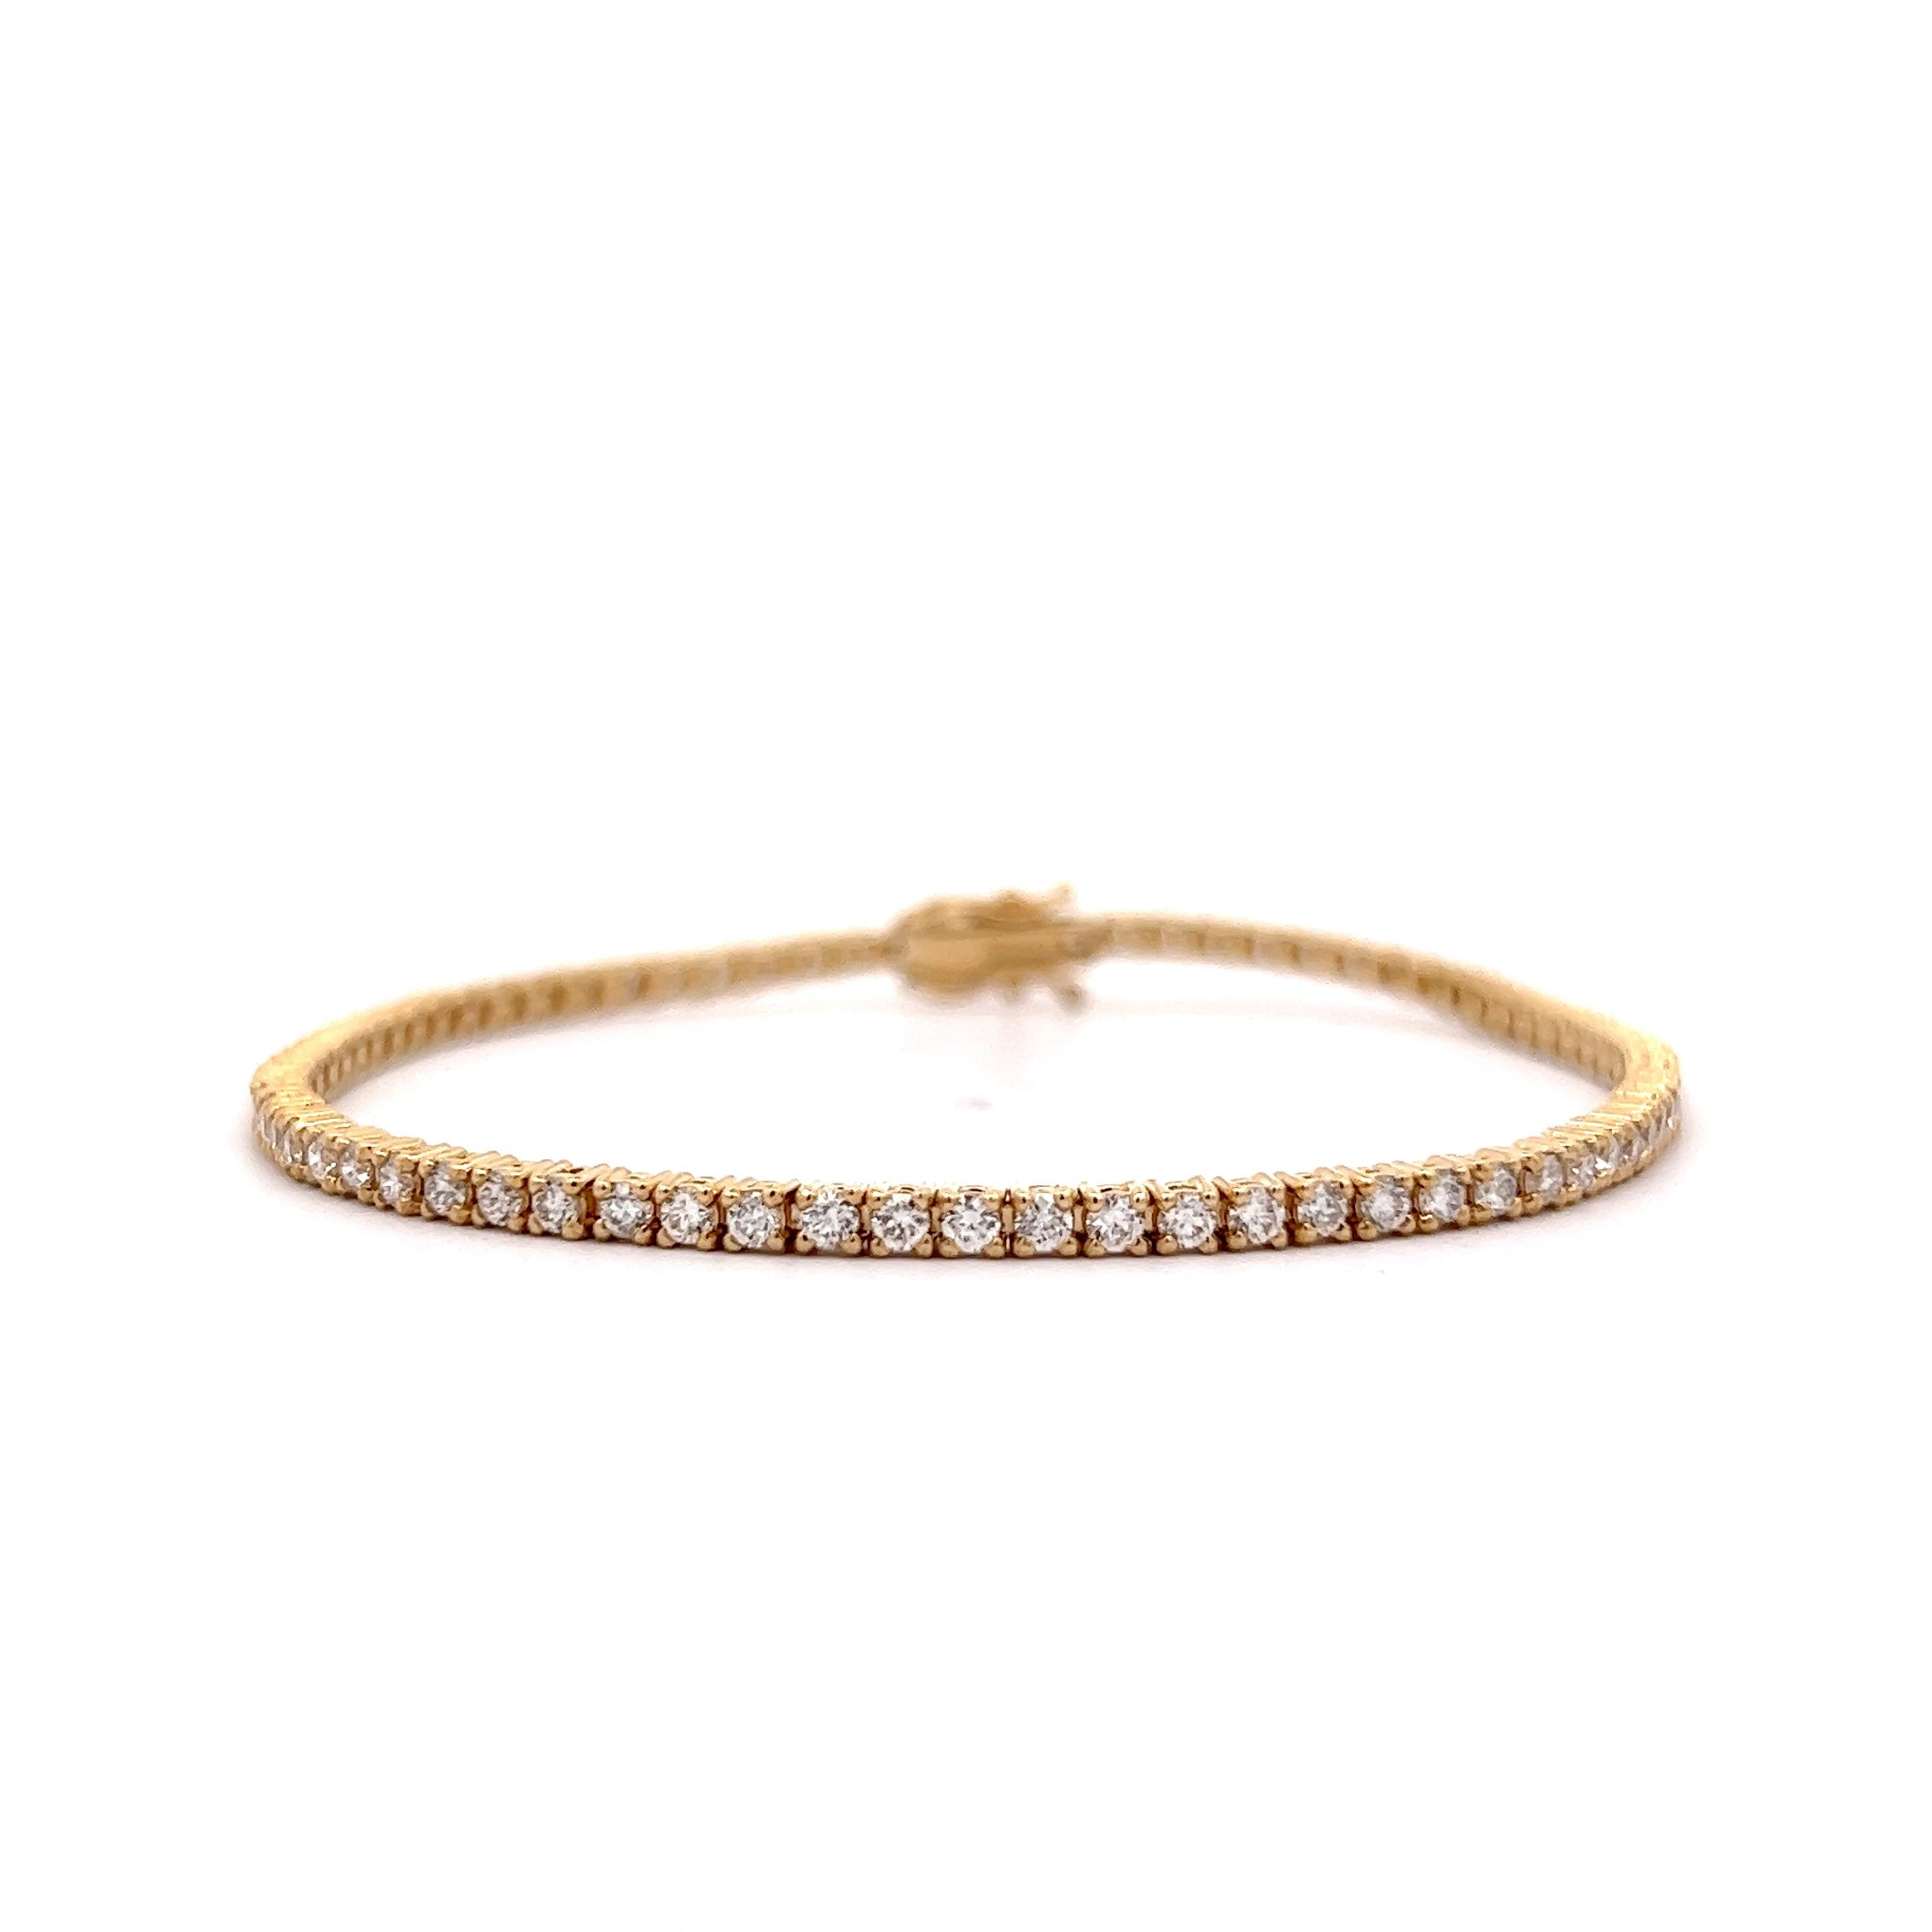 Buy 18k Gold Diamond Bracelet / Pave Diamond Stacking Bangle / Minimalist Diamond  Bangle Bracelet / Round Diamond Wedding Sleek Bangle for Women Online in  India - Etsy